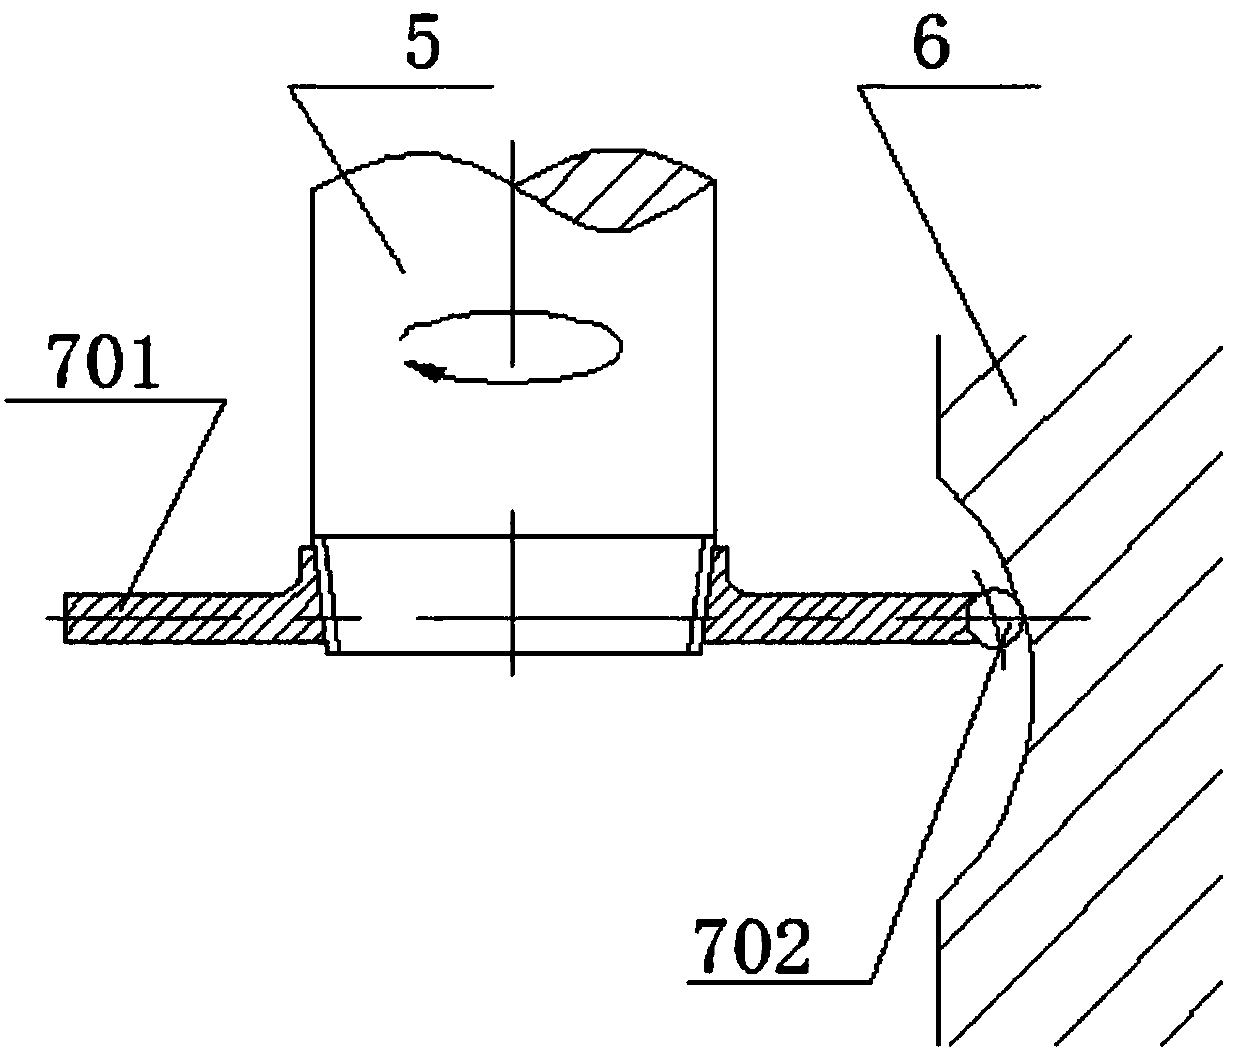 Single-blade lateral milling method based on torsional ultrasonic vibration